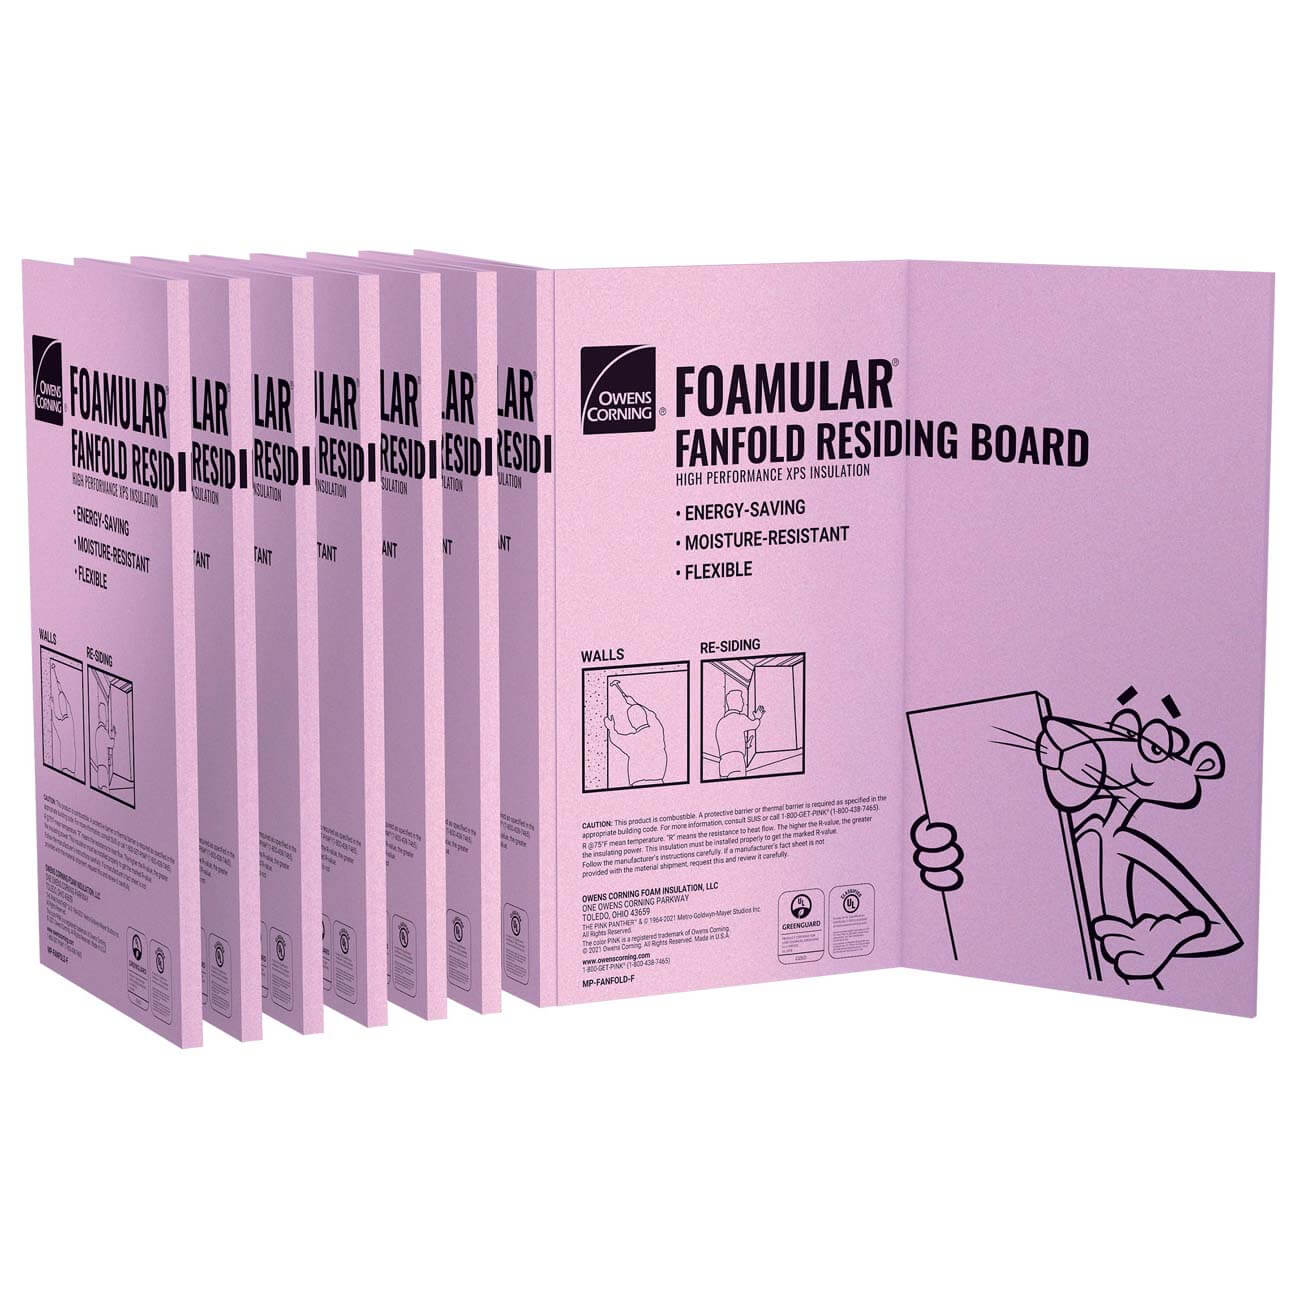 Foamular fanfold residing board insulation pink